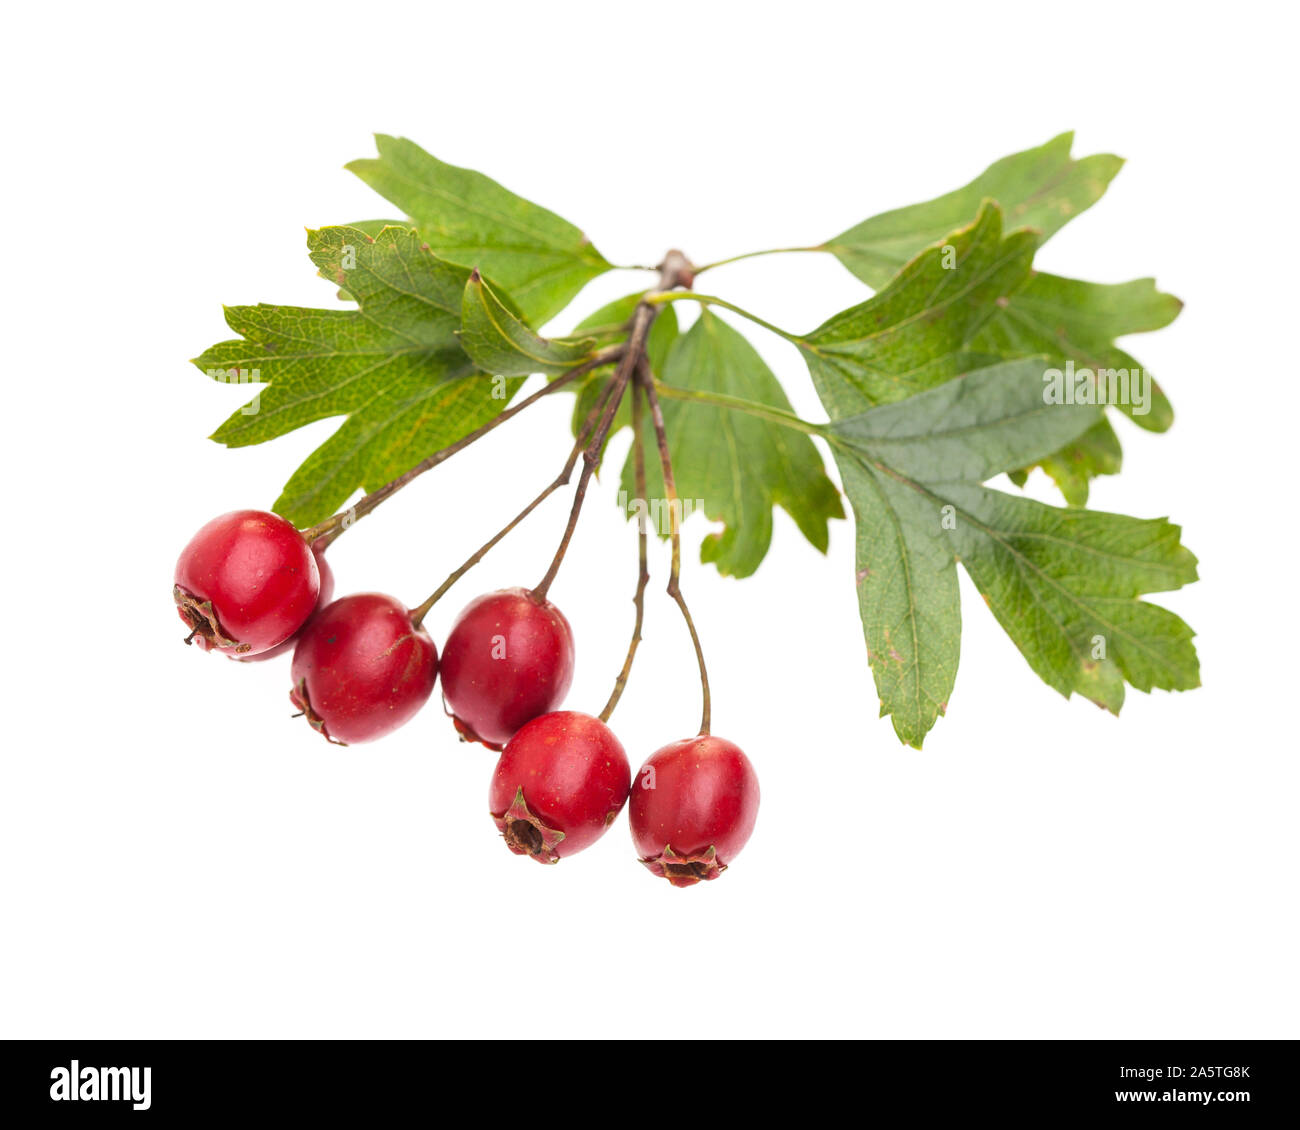 medicinal plants: Crataegus monogyna (Crataegus monogyna) with red berries isolated on white background Stock Photo